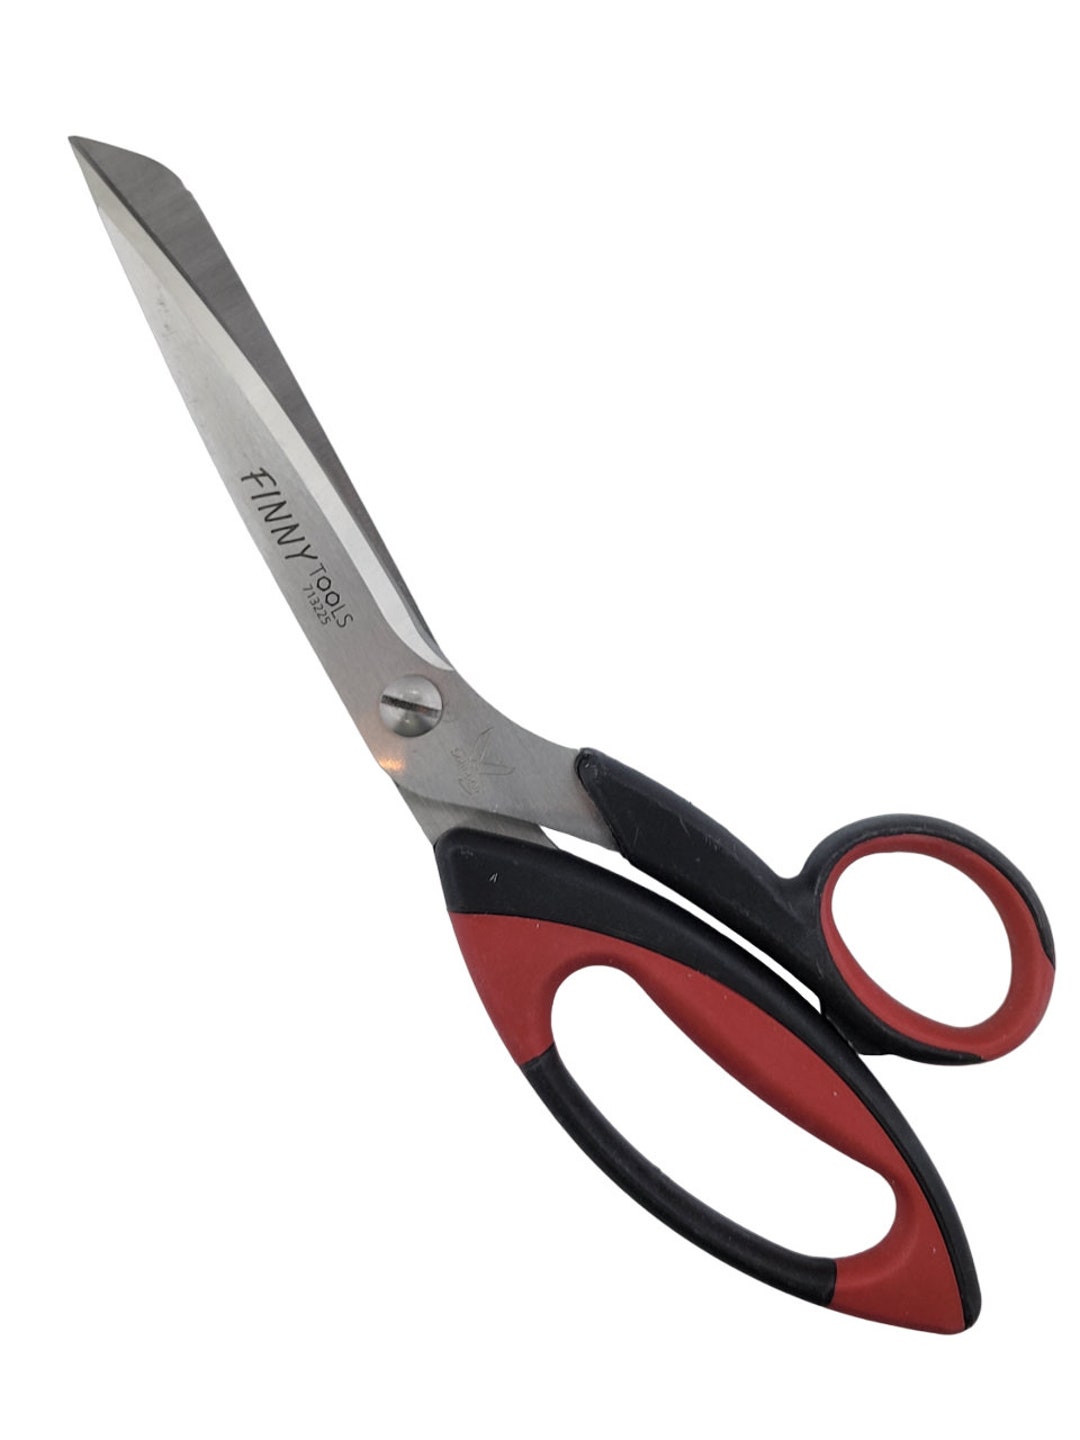 Fiskars ReNew manicure scissors, 10 cm